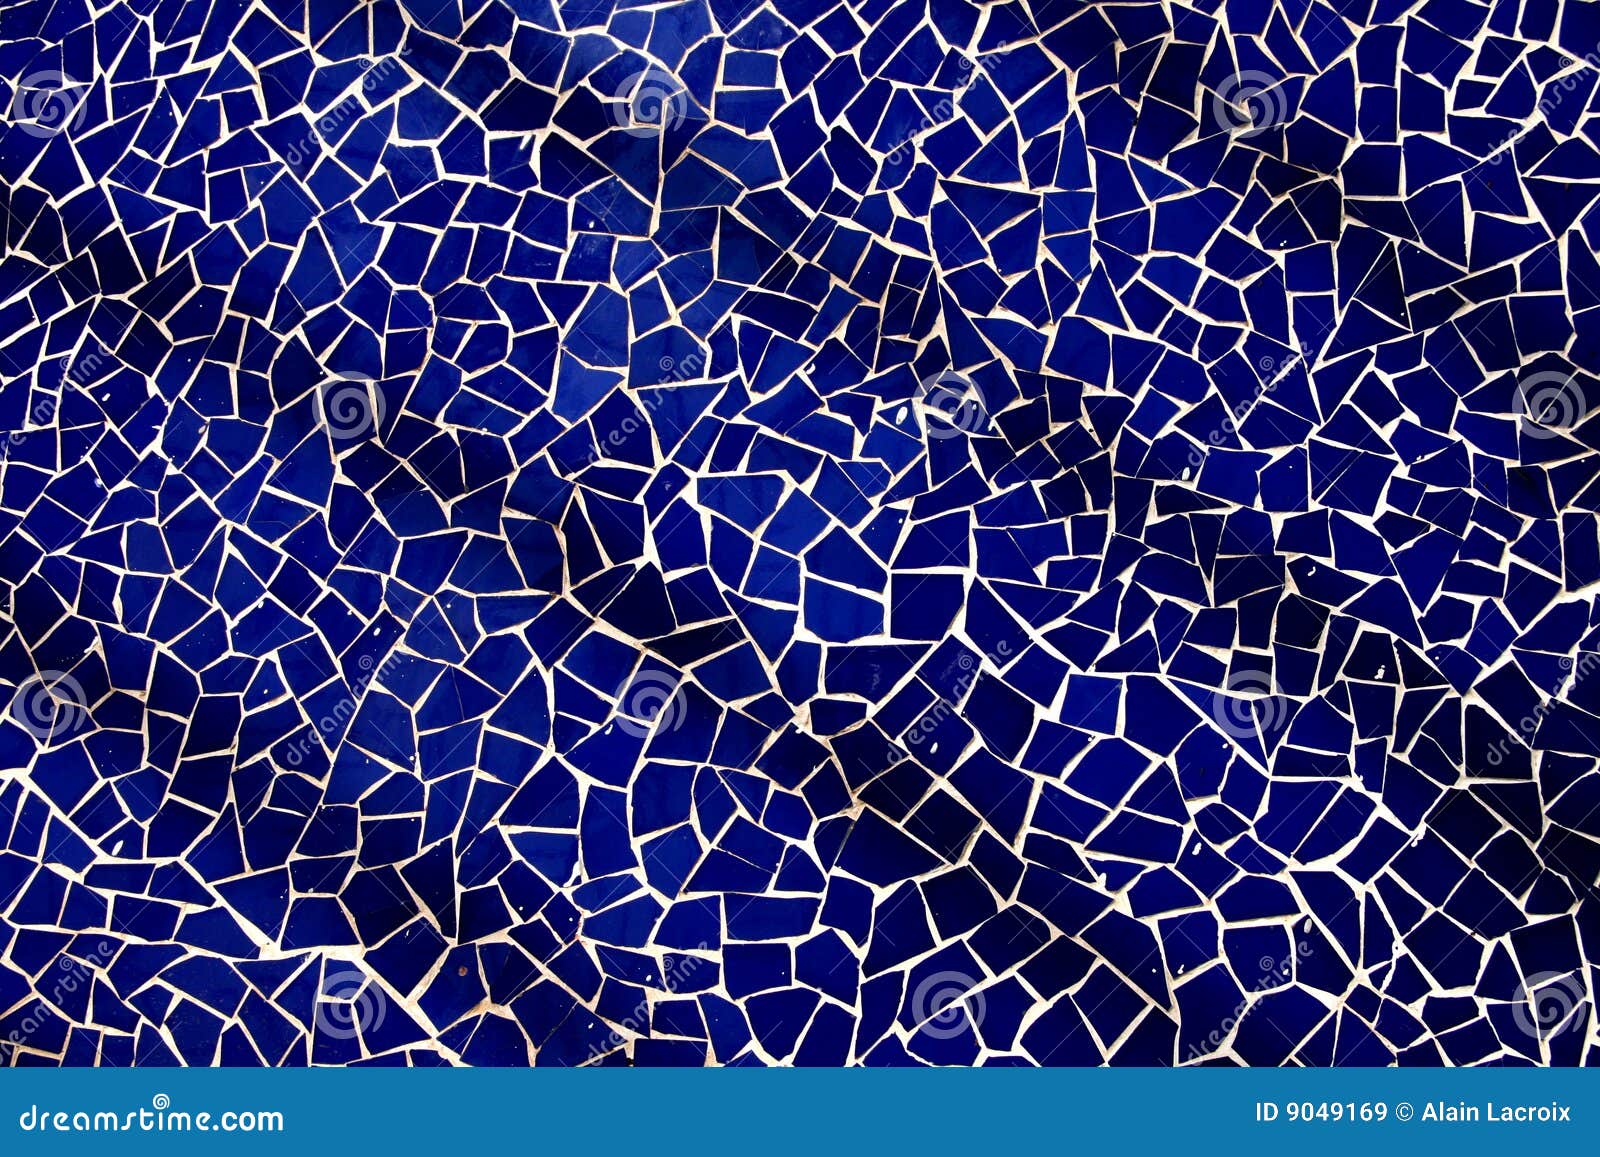 dark blue mosaics